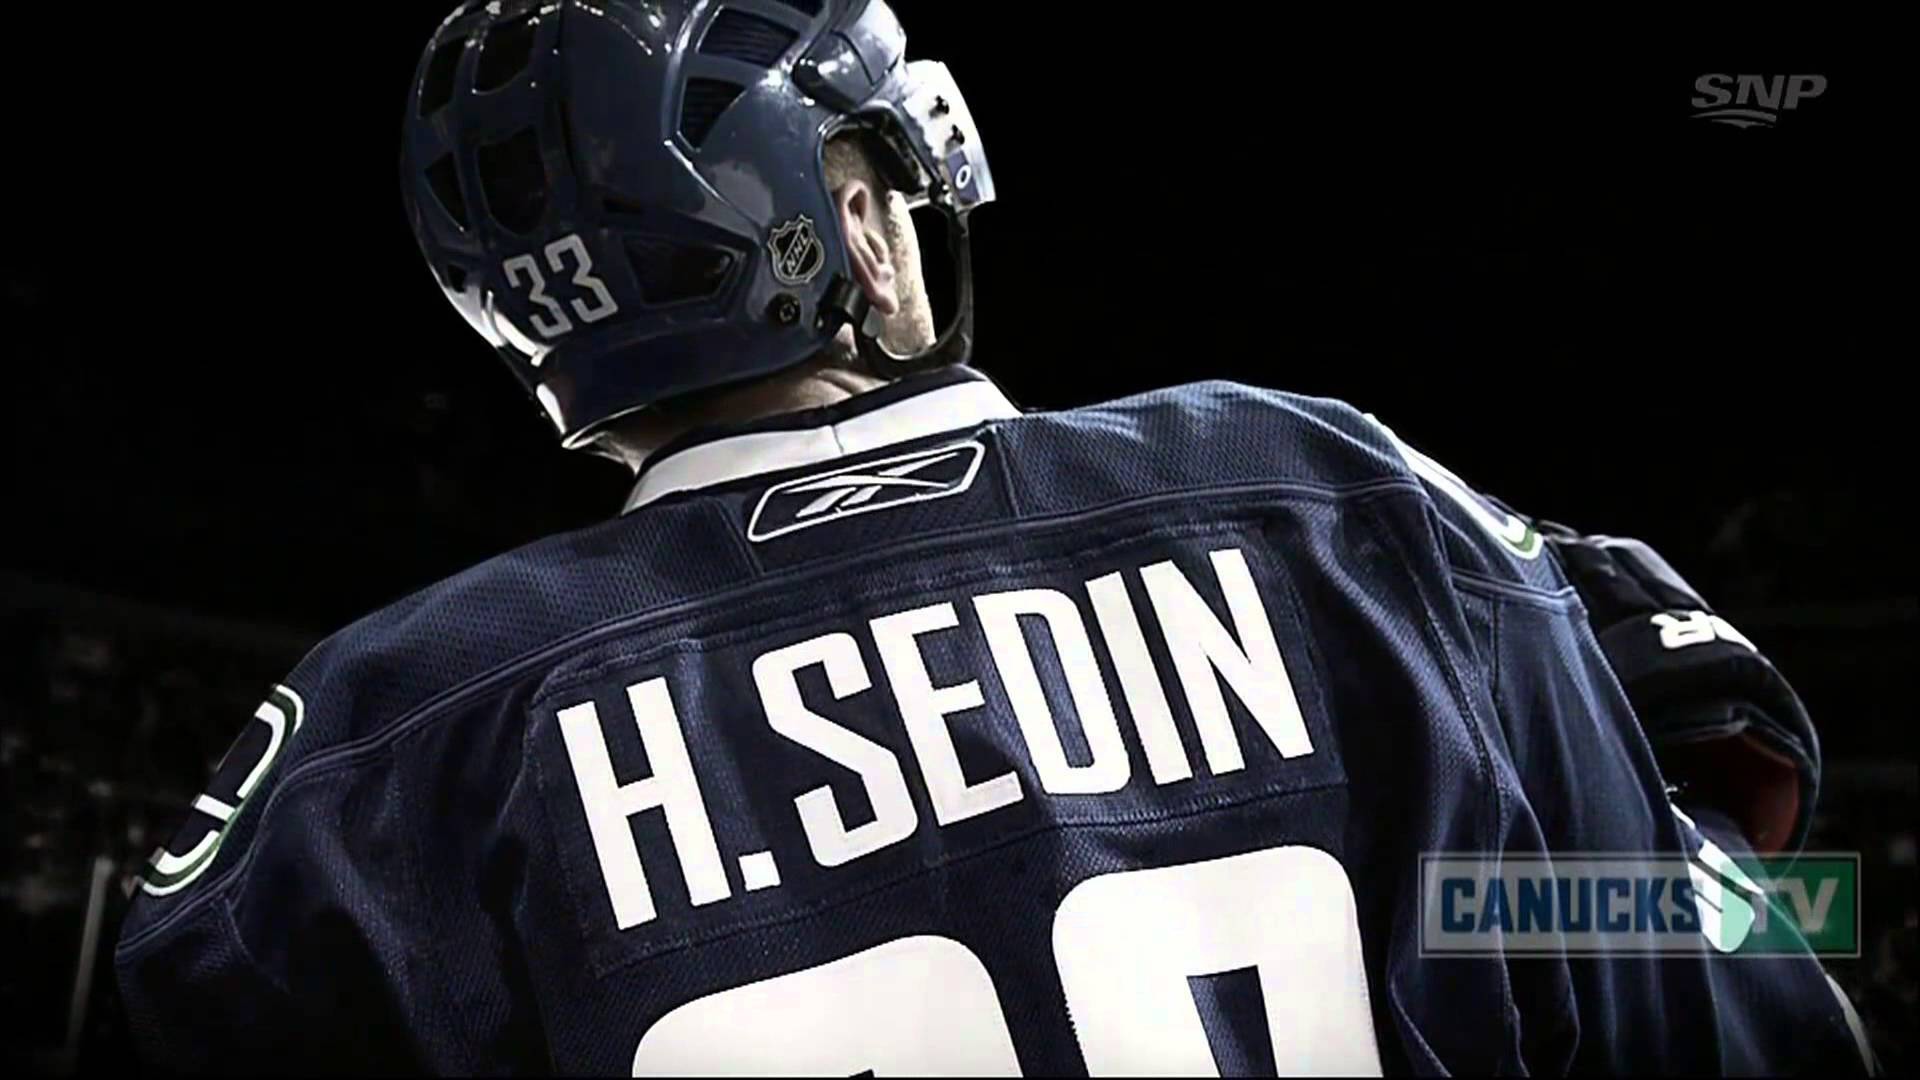 Hockey player of Vancouver Henrik Sedin